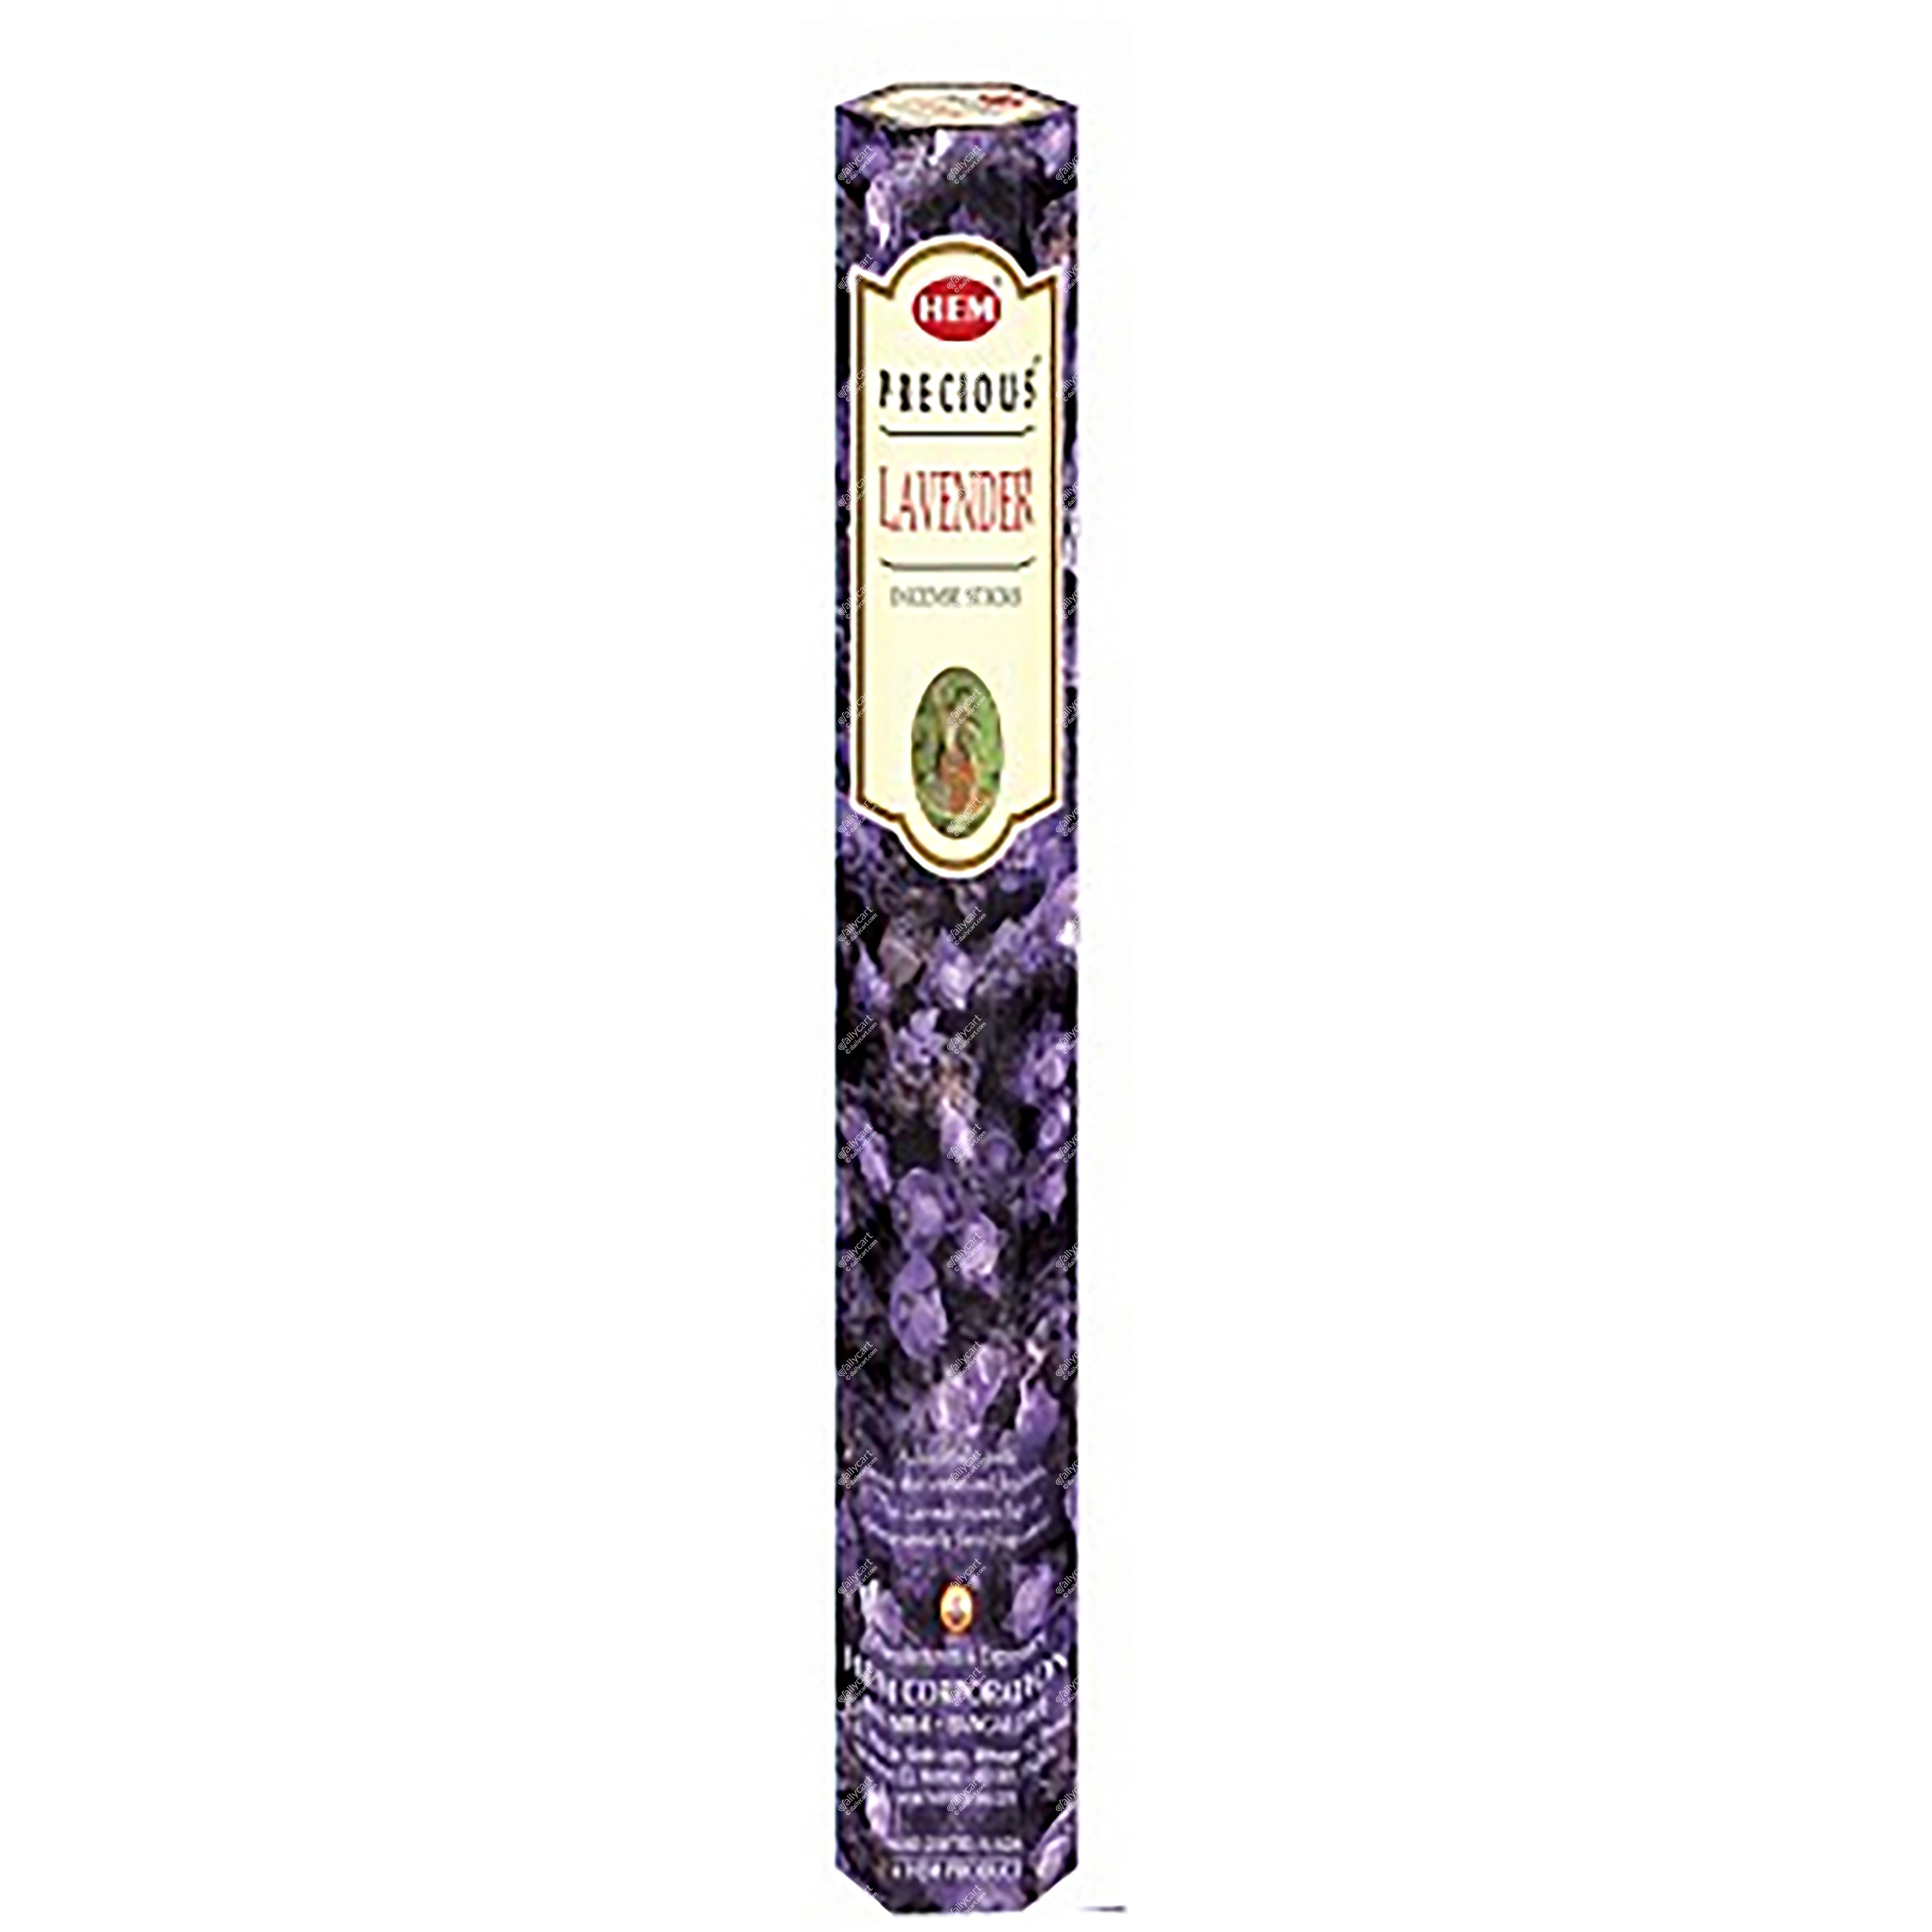 Hem Precious Lavender Incense Sticks, 20 Sticks, 1 Tube